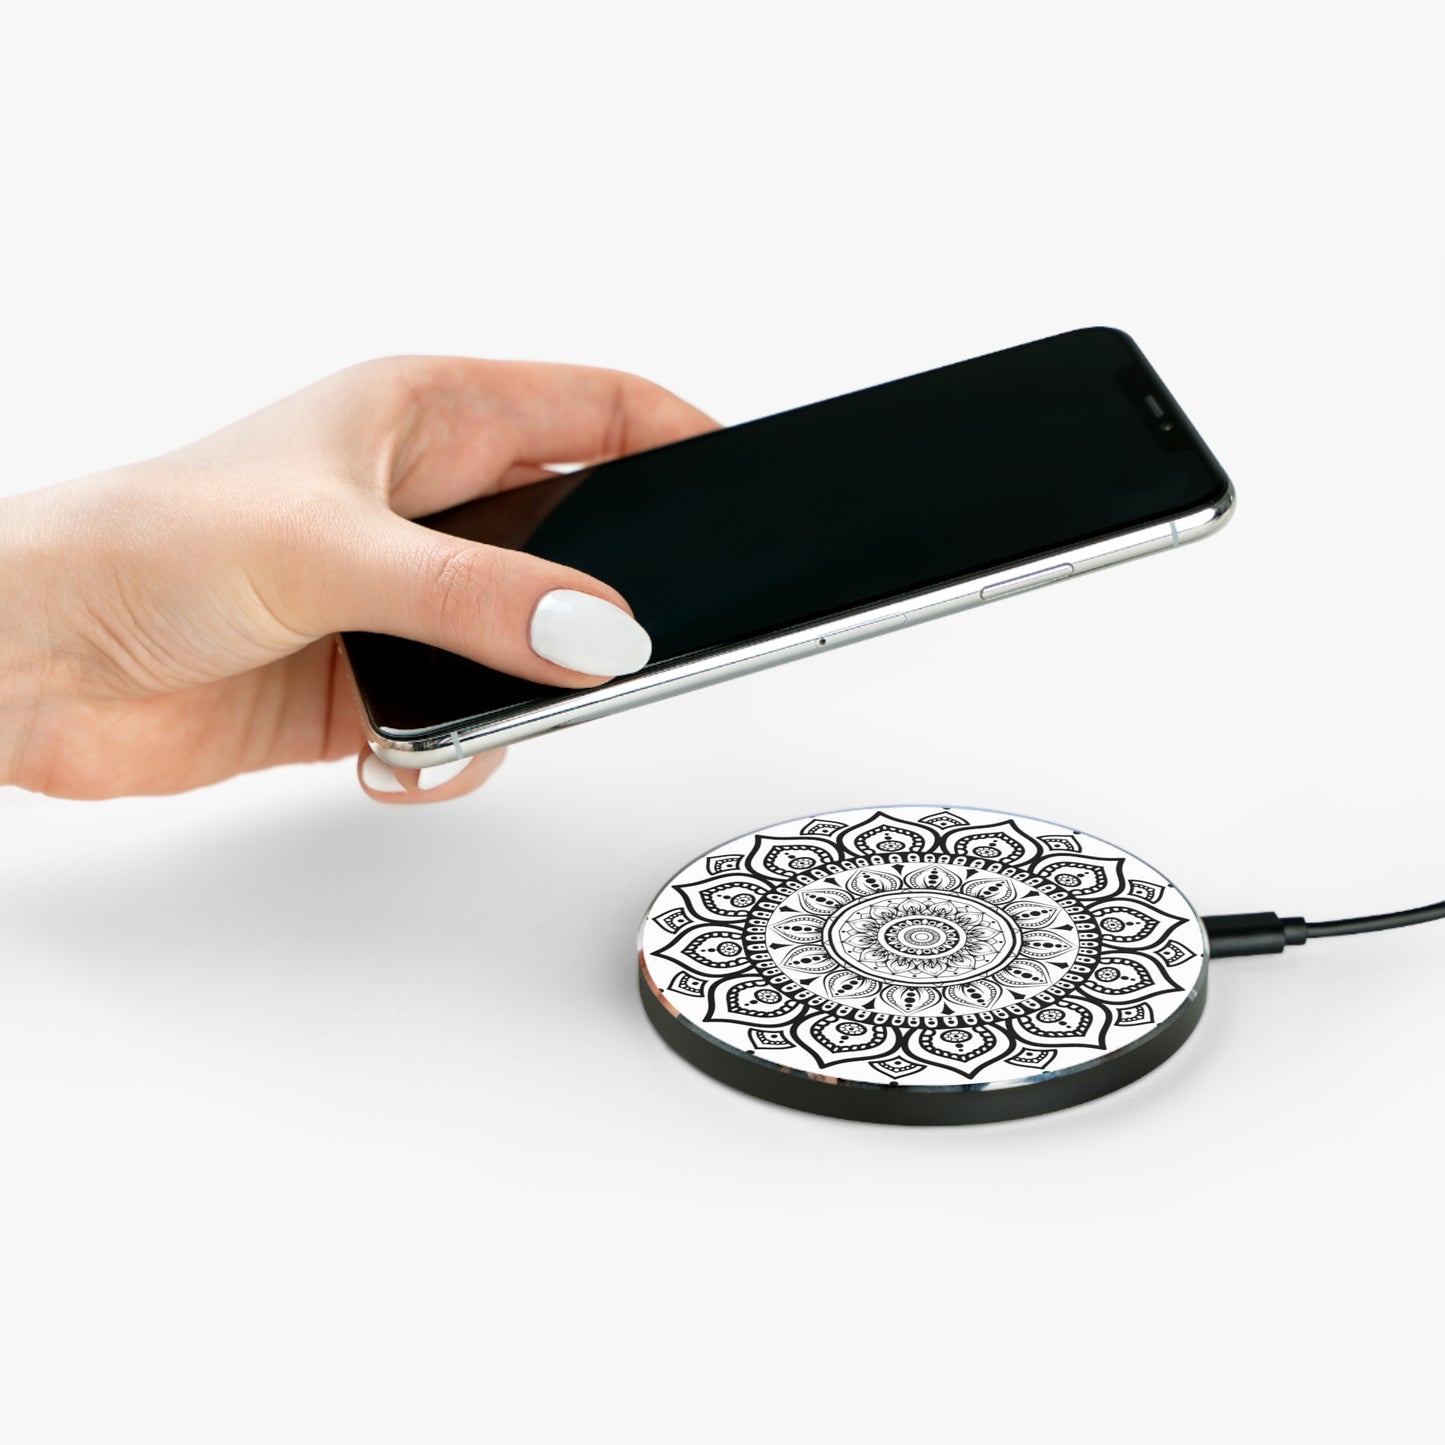 Wireless Charger With Beautiful Mandala Design